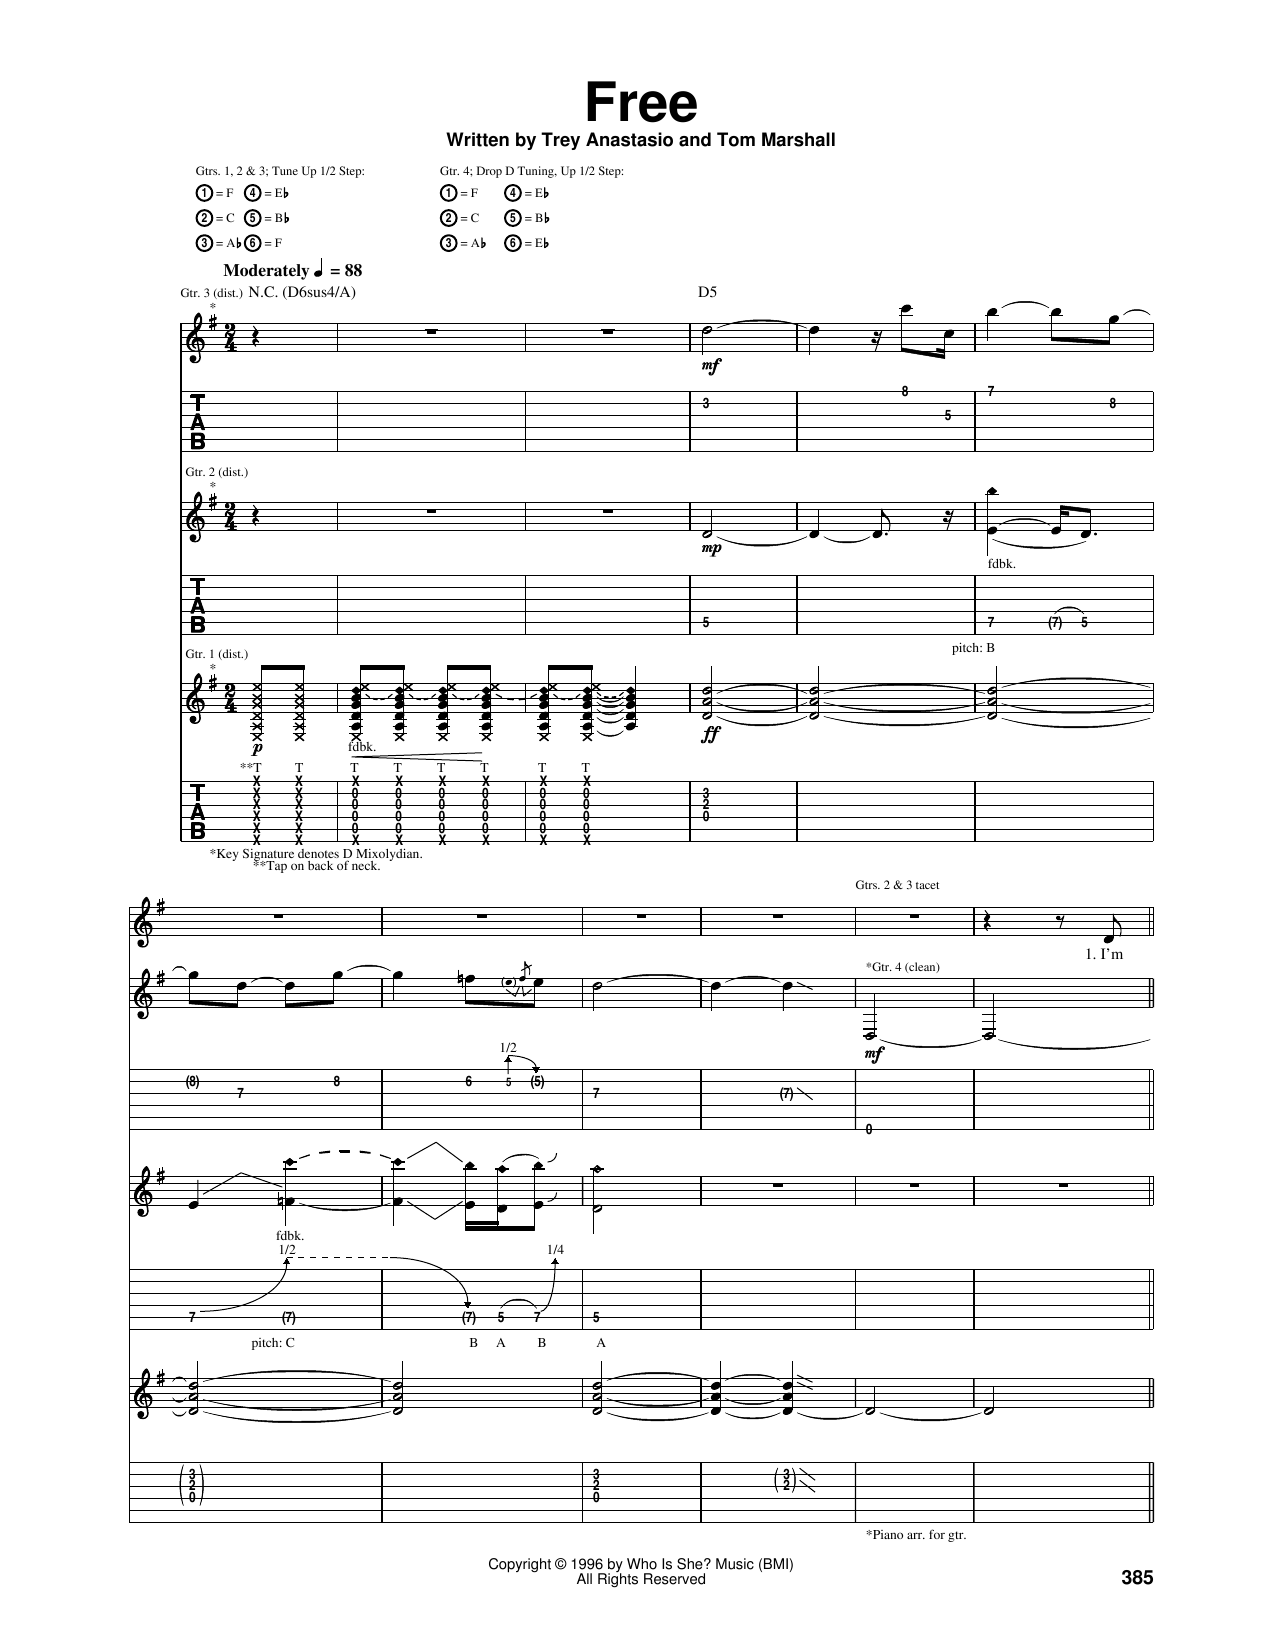 Phish Free Sheet Music Notes & Chords for Guitar Tab - Download or Print PDF